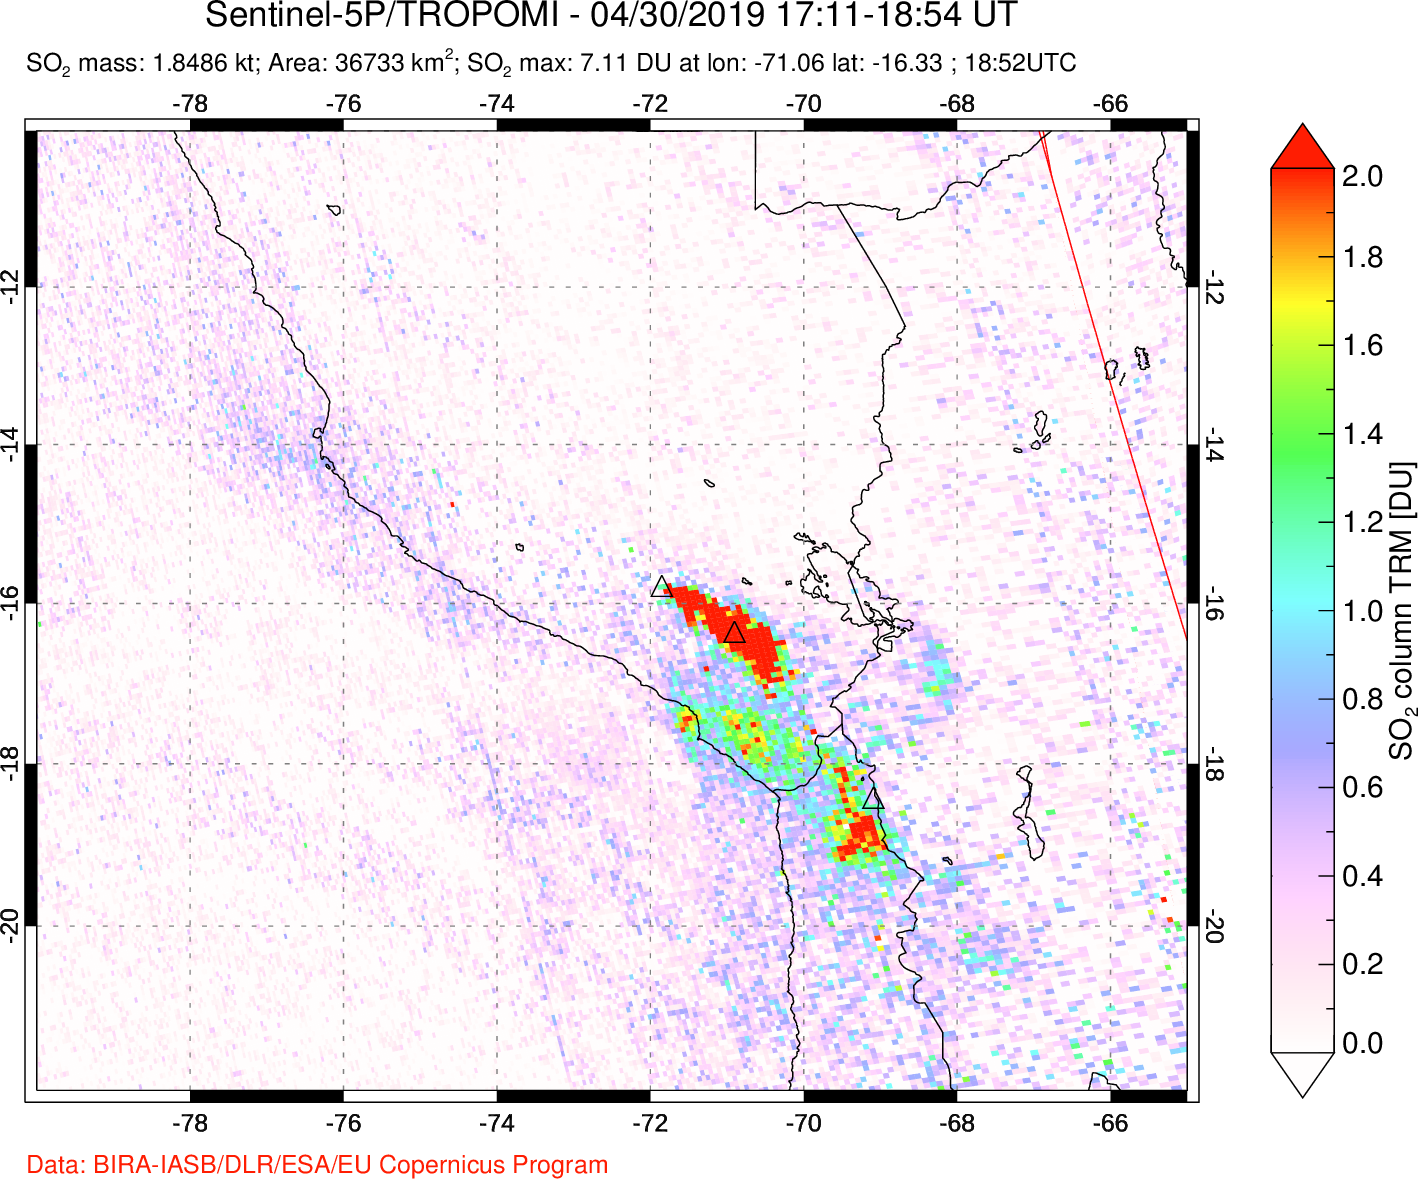 A sulfur dioxide image over Peru on Apr 30, 2019.